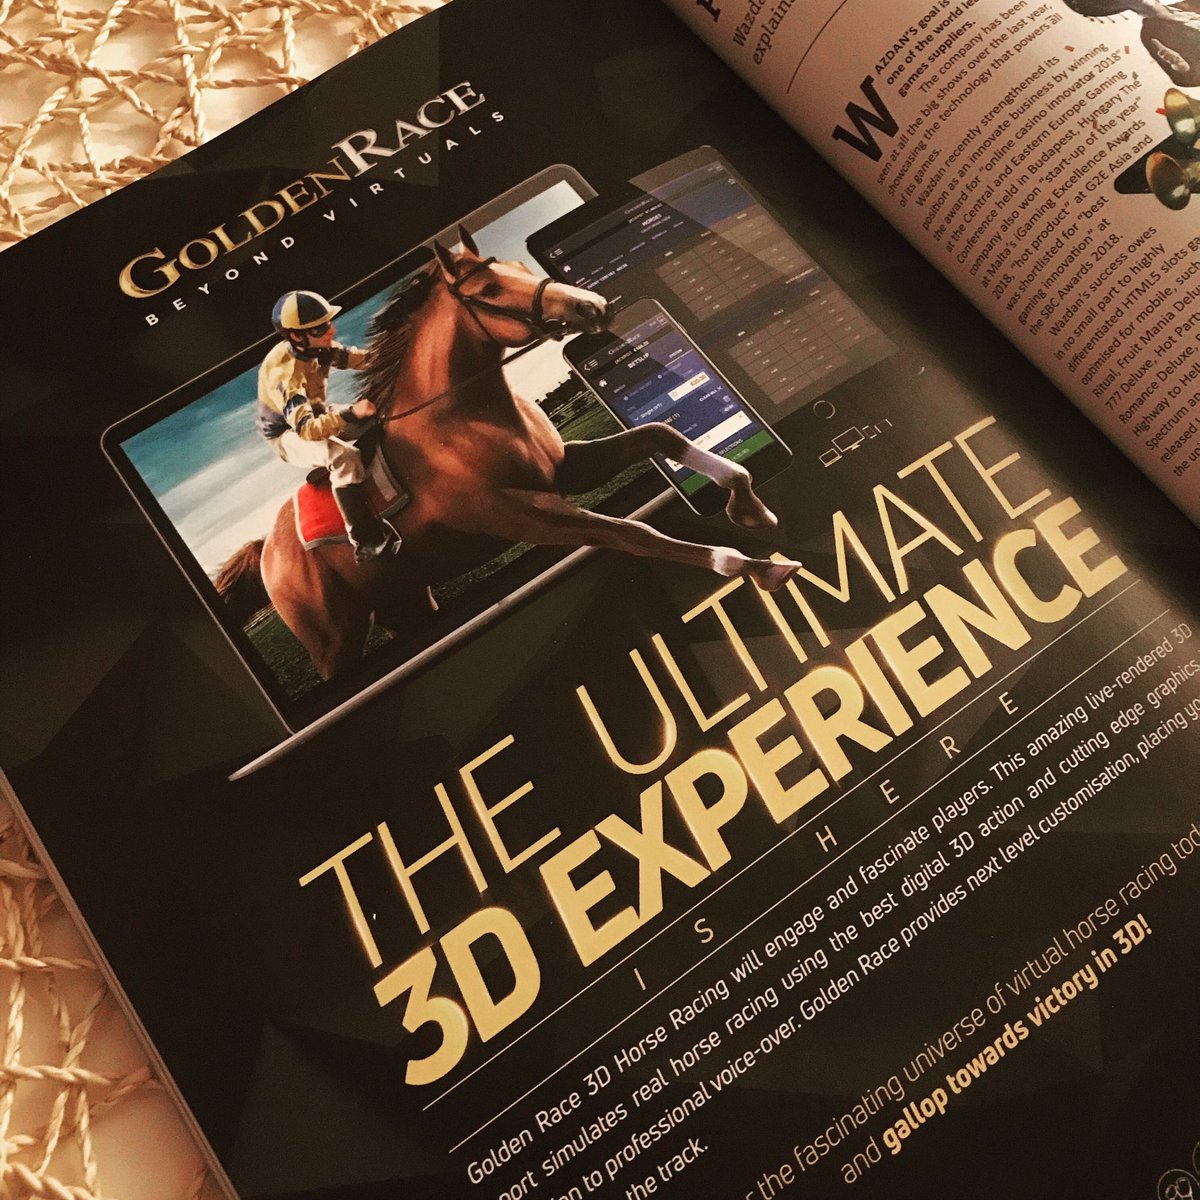 The new generation of virtual horse racing is coming... 👌🏻 #sportsbetting #bettingindustry #virtualsports #gambling #horseracing @goldenrace